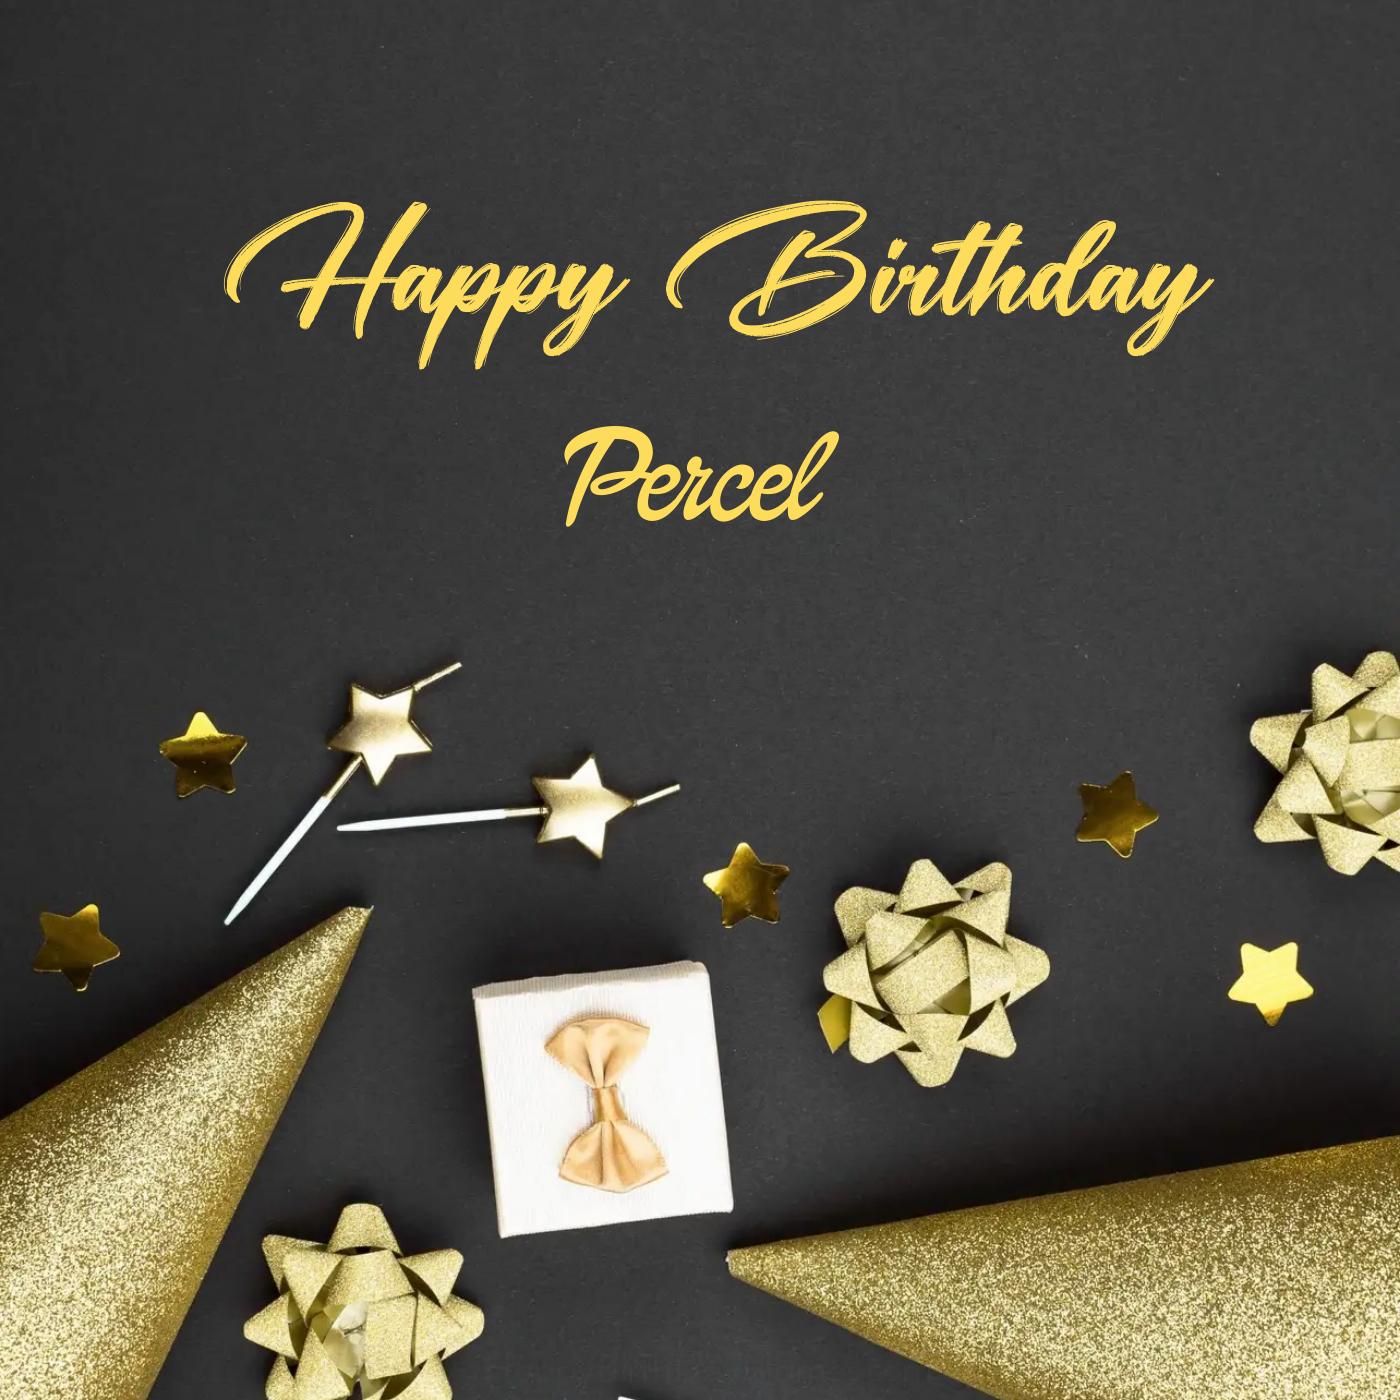 Happy Birthday Percel Golden Theme Card